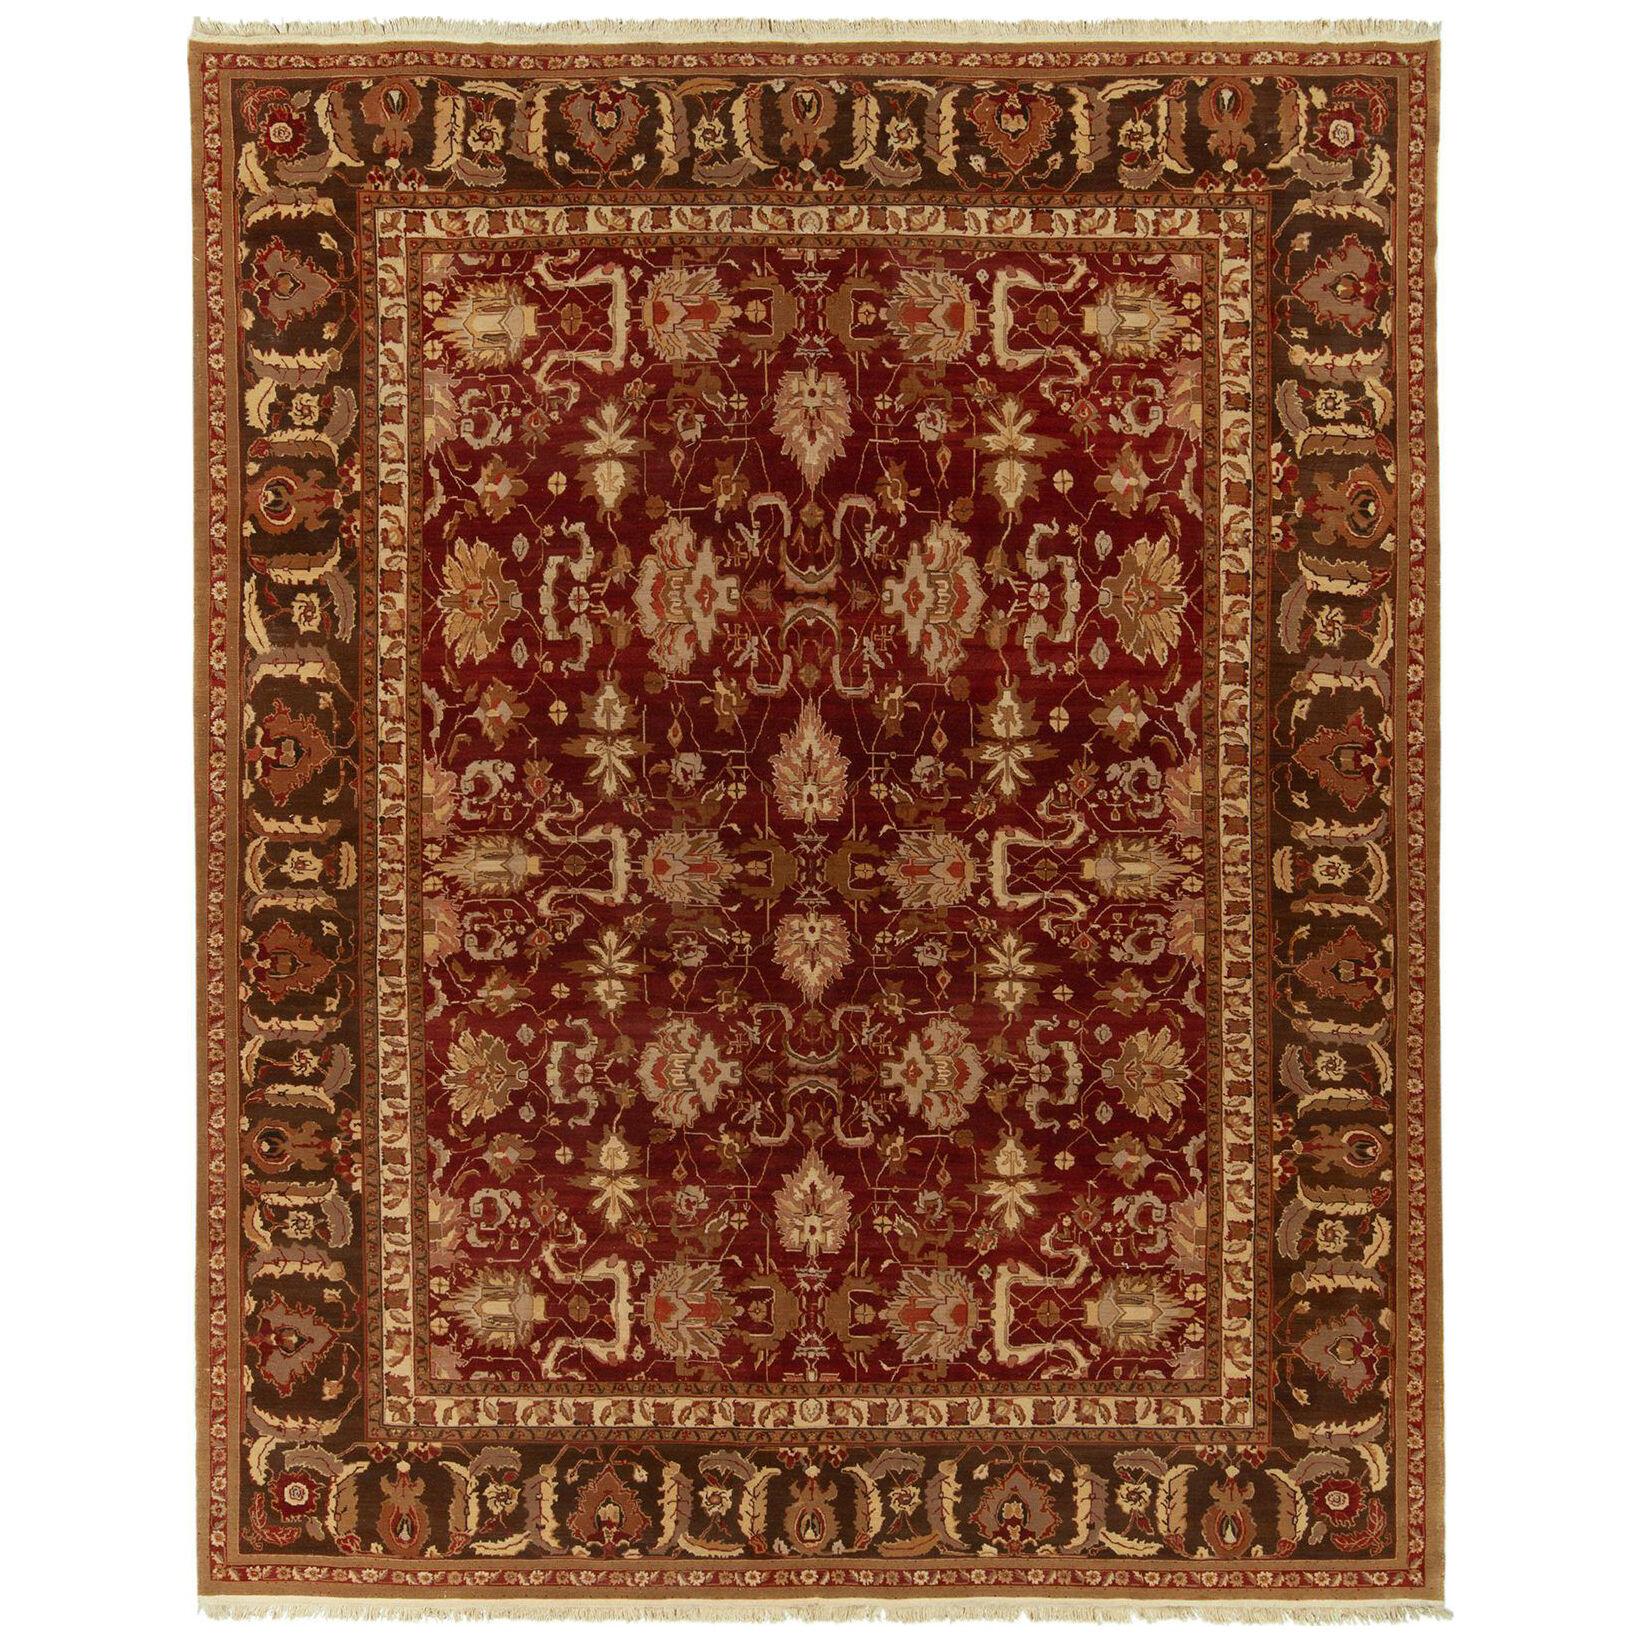 Rug & Kilim’s Agra Style Rug in Red and Beige-Brown Floral Pattern